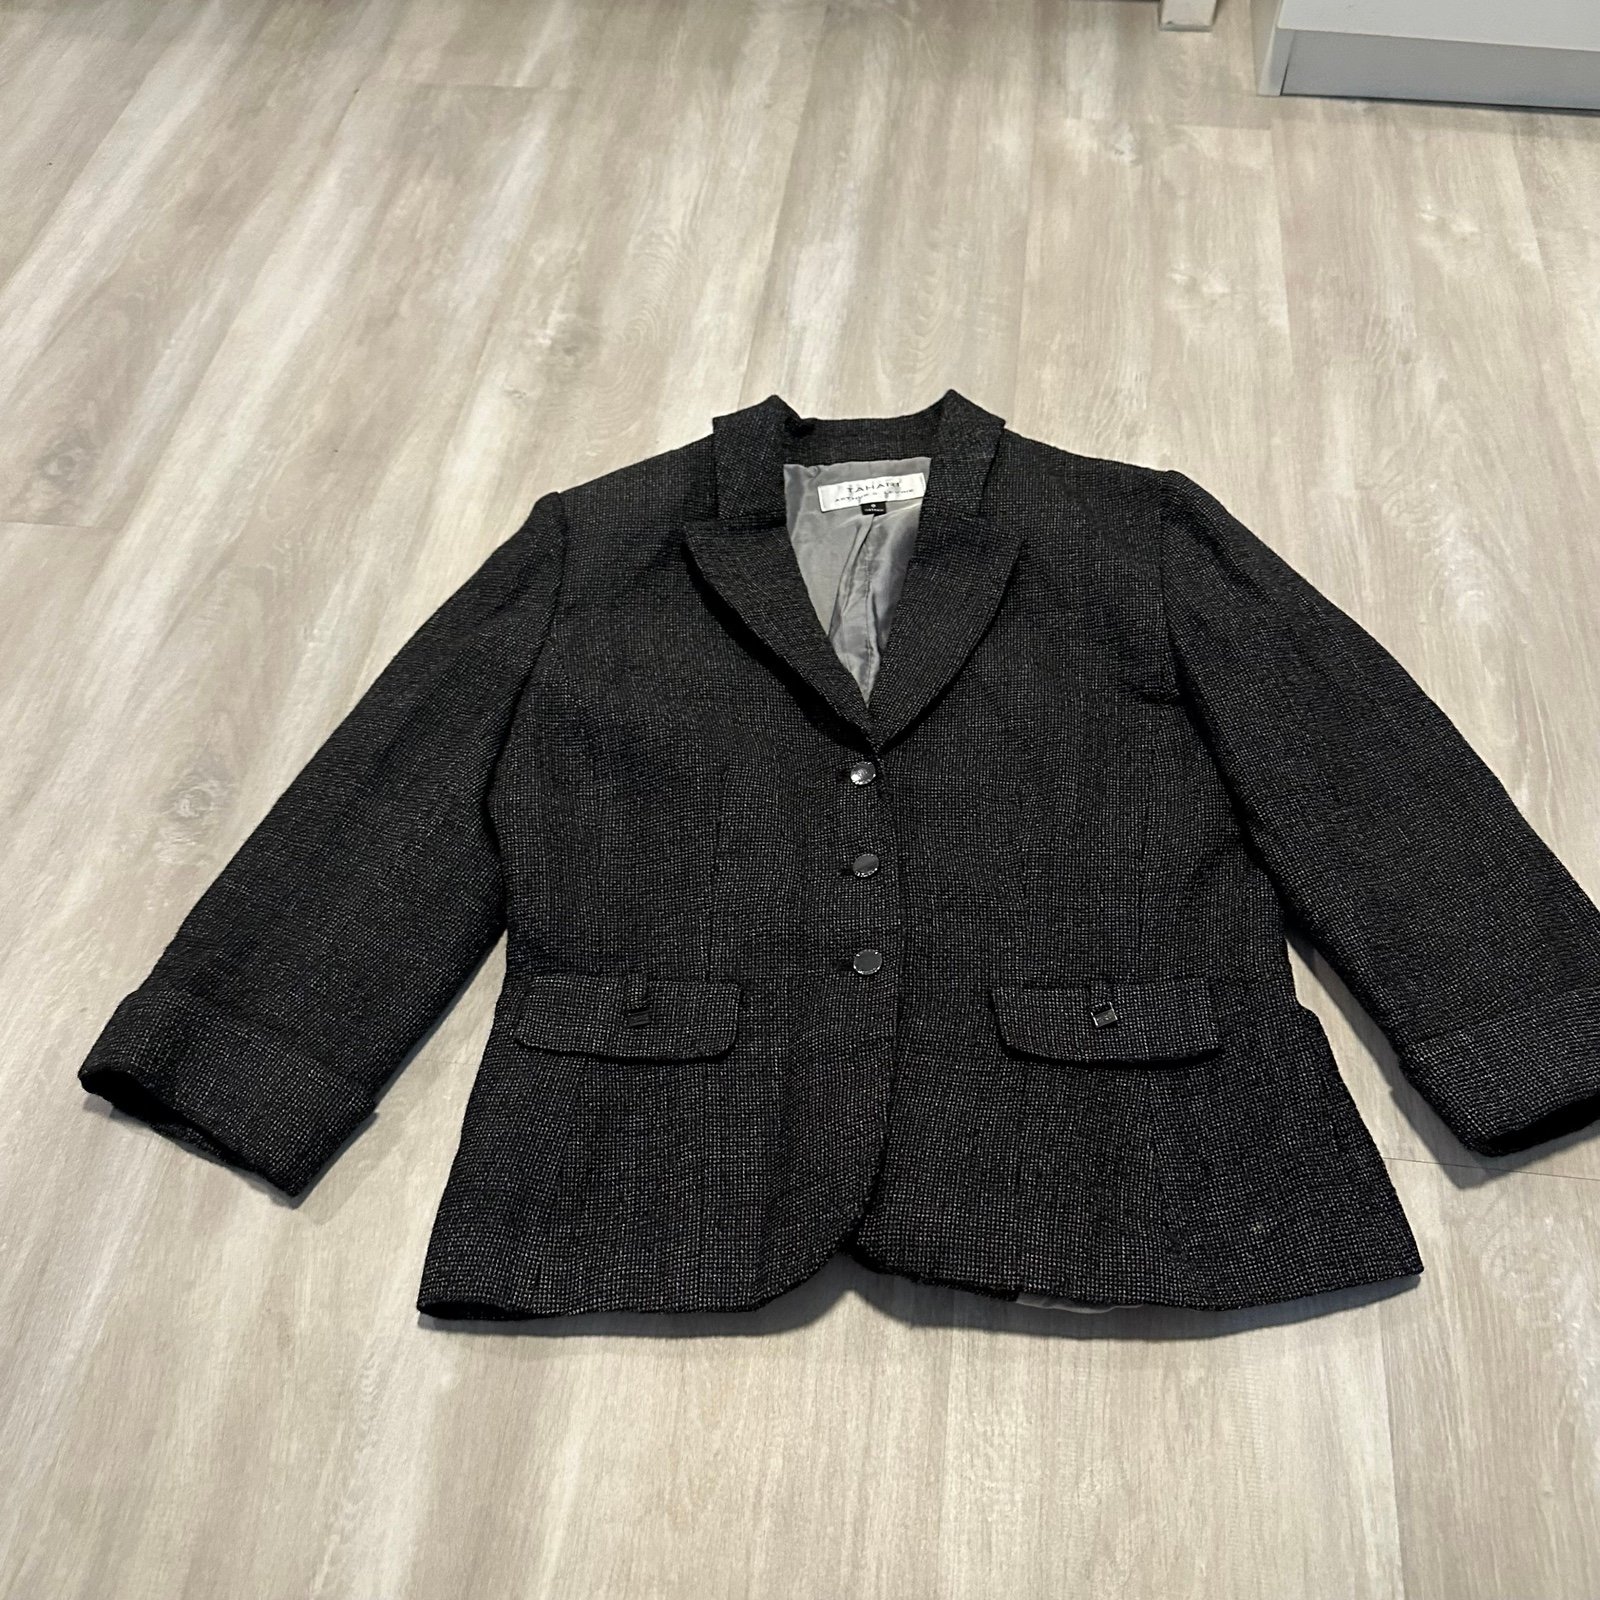 Perfect Tahari Arthur Levine Gray Lined Blazer Jacket Sz 8 g6m35Jk5d just for you